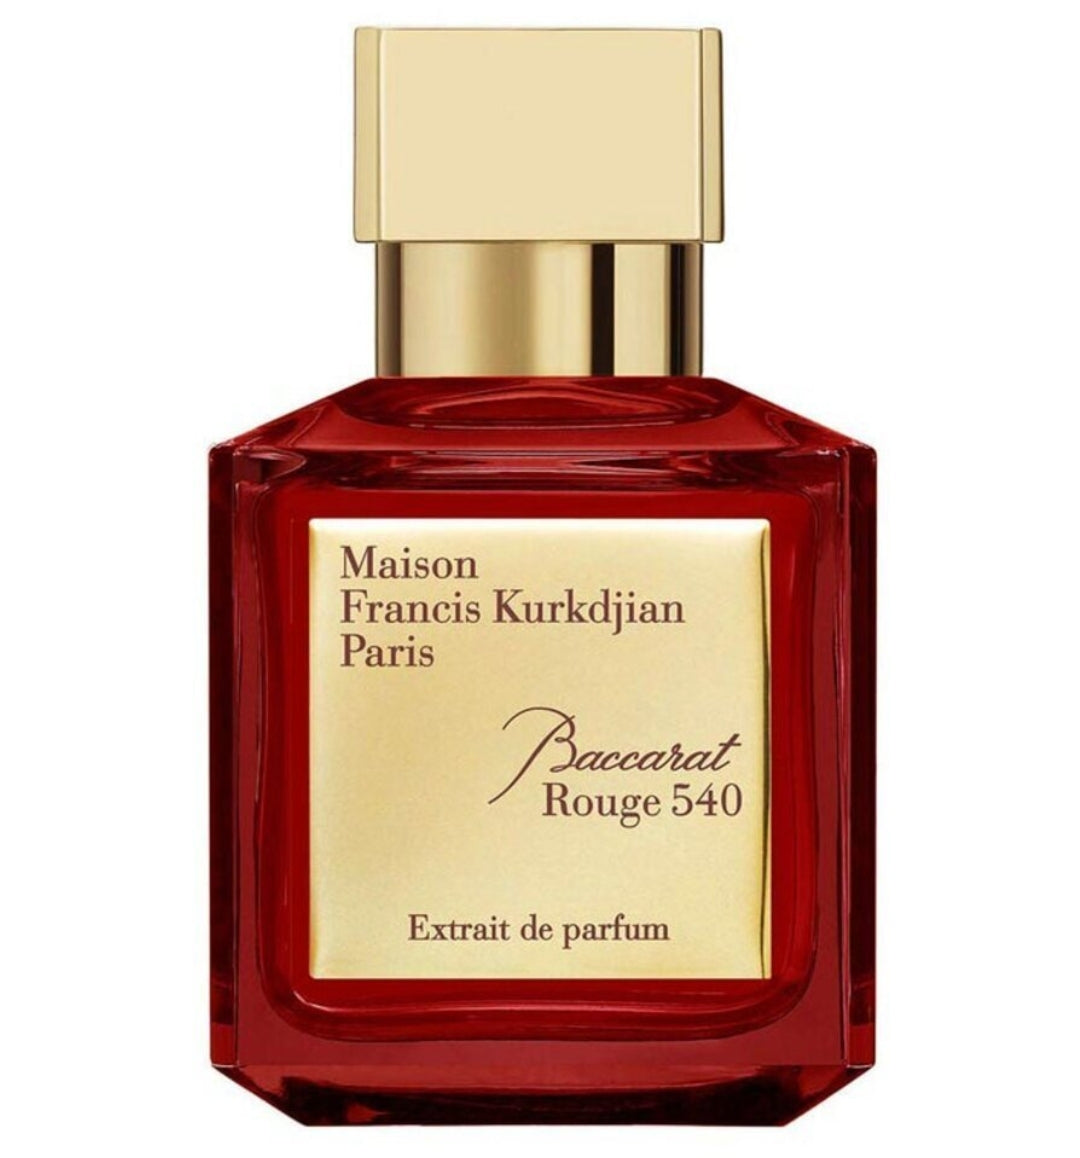 MAISON FRANCIS KURKDJIAN (MFK) Baccarat Rouge 540 Extrait de Parfum 70ml *